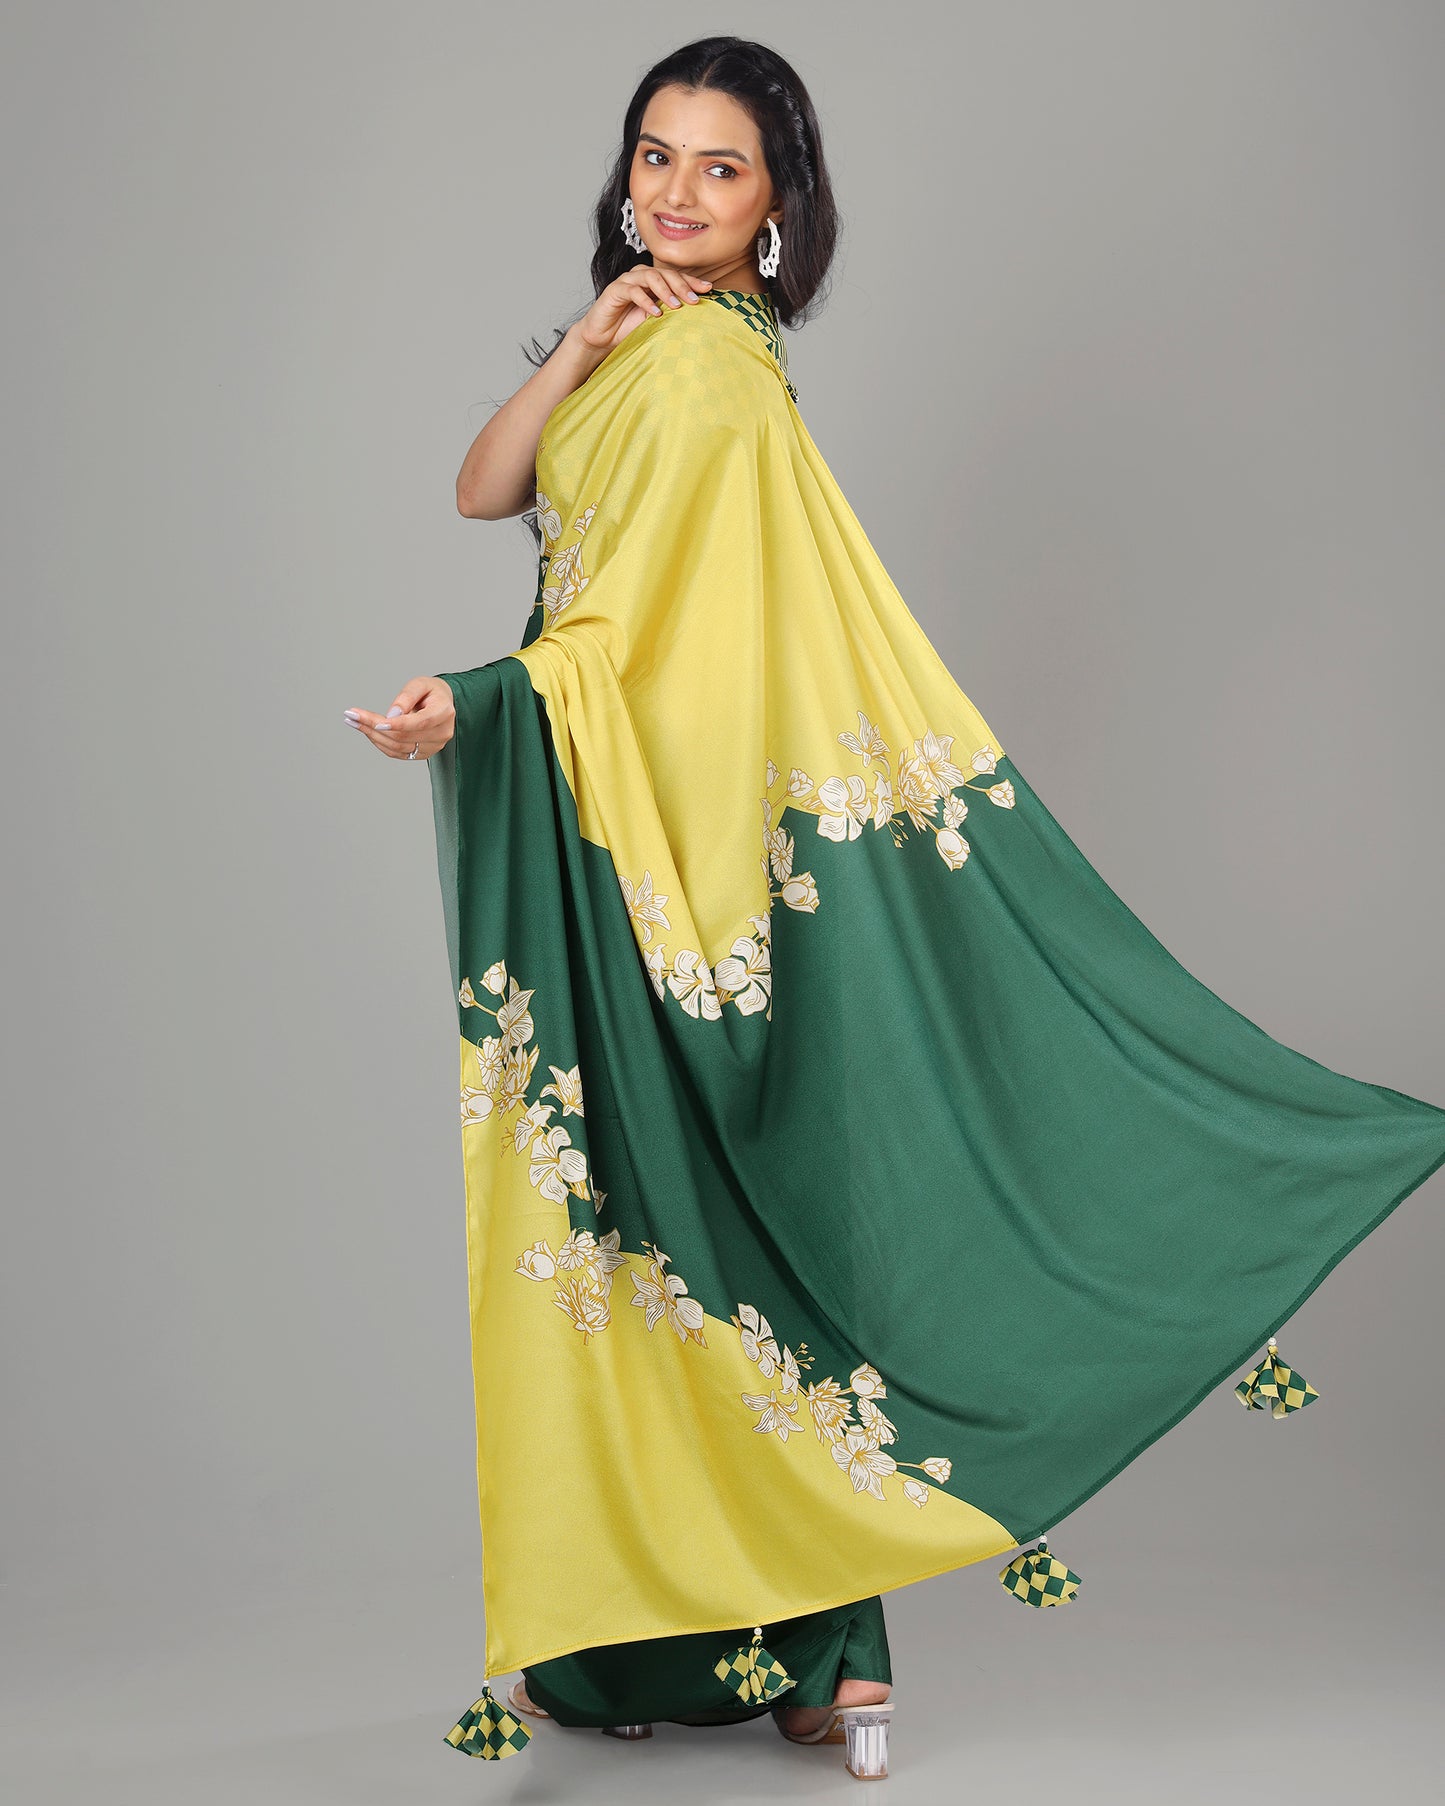 Exclusive Vintage Floral Women's Designer Bollywood Pre-Draped Saree